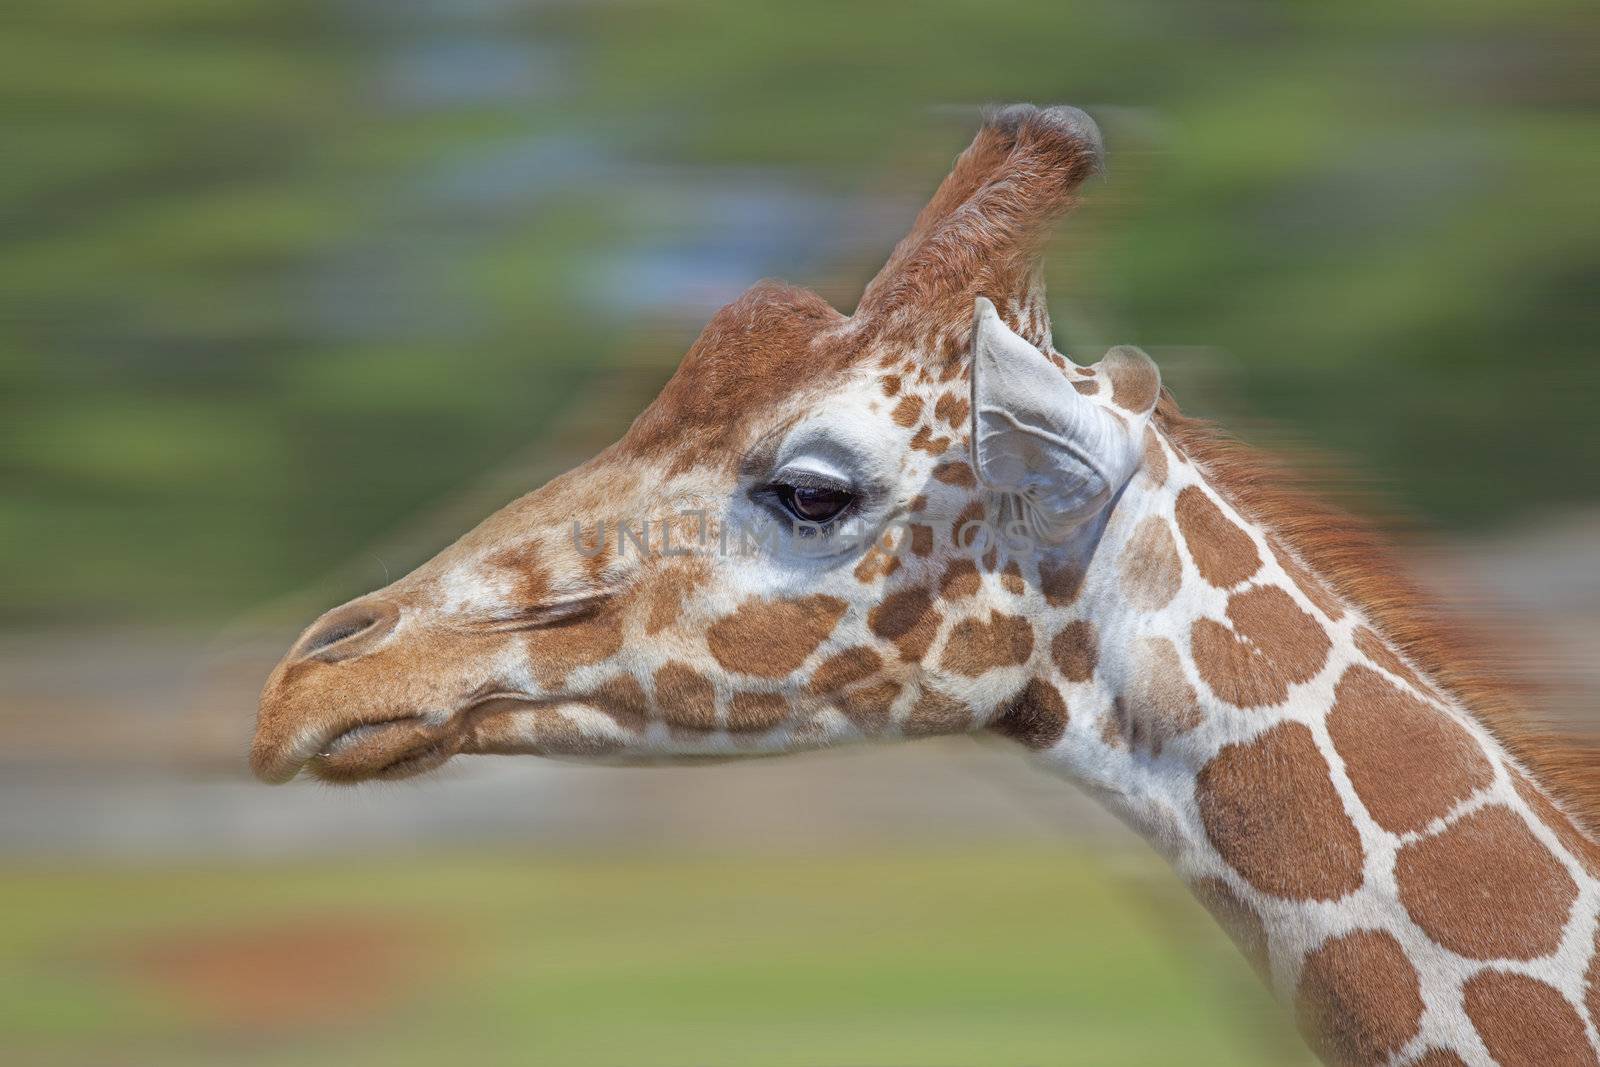 Giraffe by kjorgen